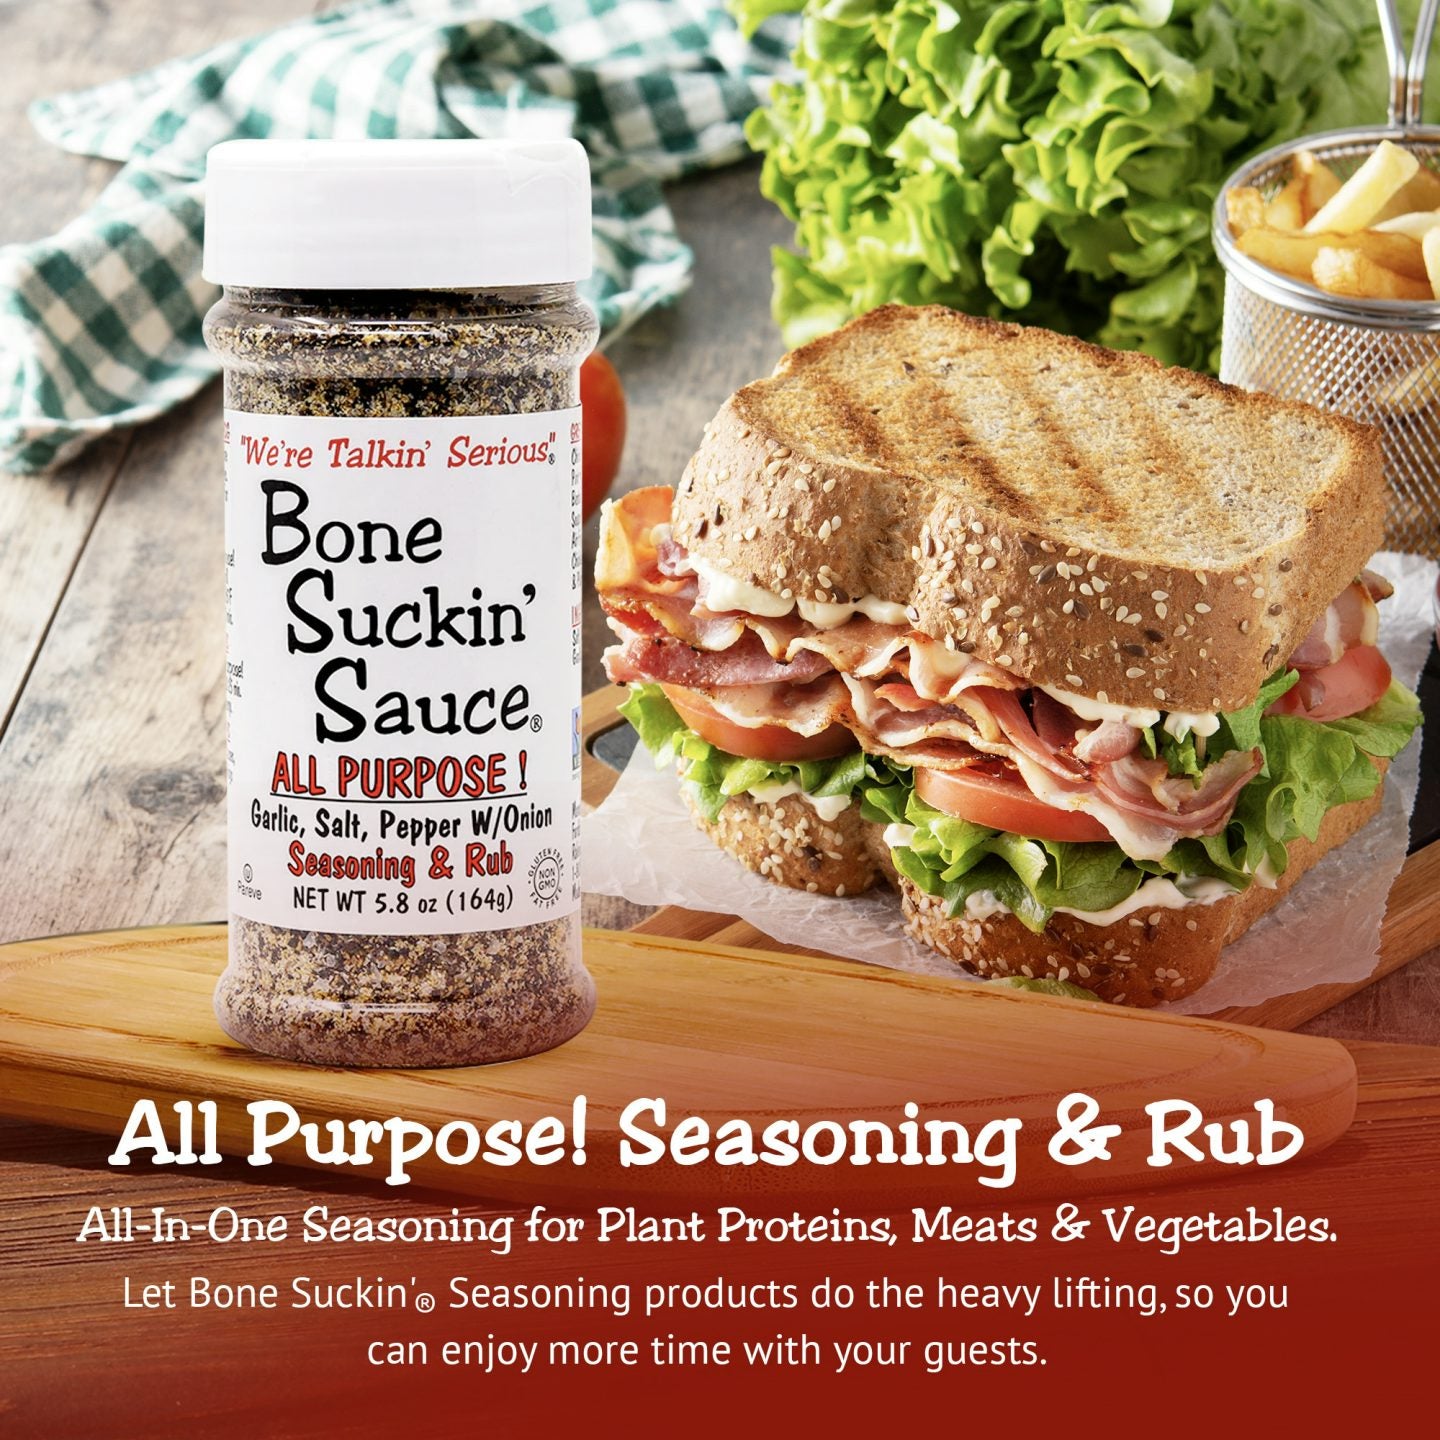 Bone Suckin' All Purpose Seasoning & Rub 5.8 oz, Zero Calorie, Sugar Free, Gluten Free, Non GMO, Kosher, Garlic, Salt, Pepper & Onion, For Pork, Beef, Chicken, Seafood, Pasta, Veggies! No MSG!